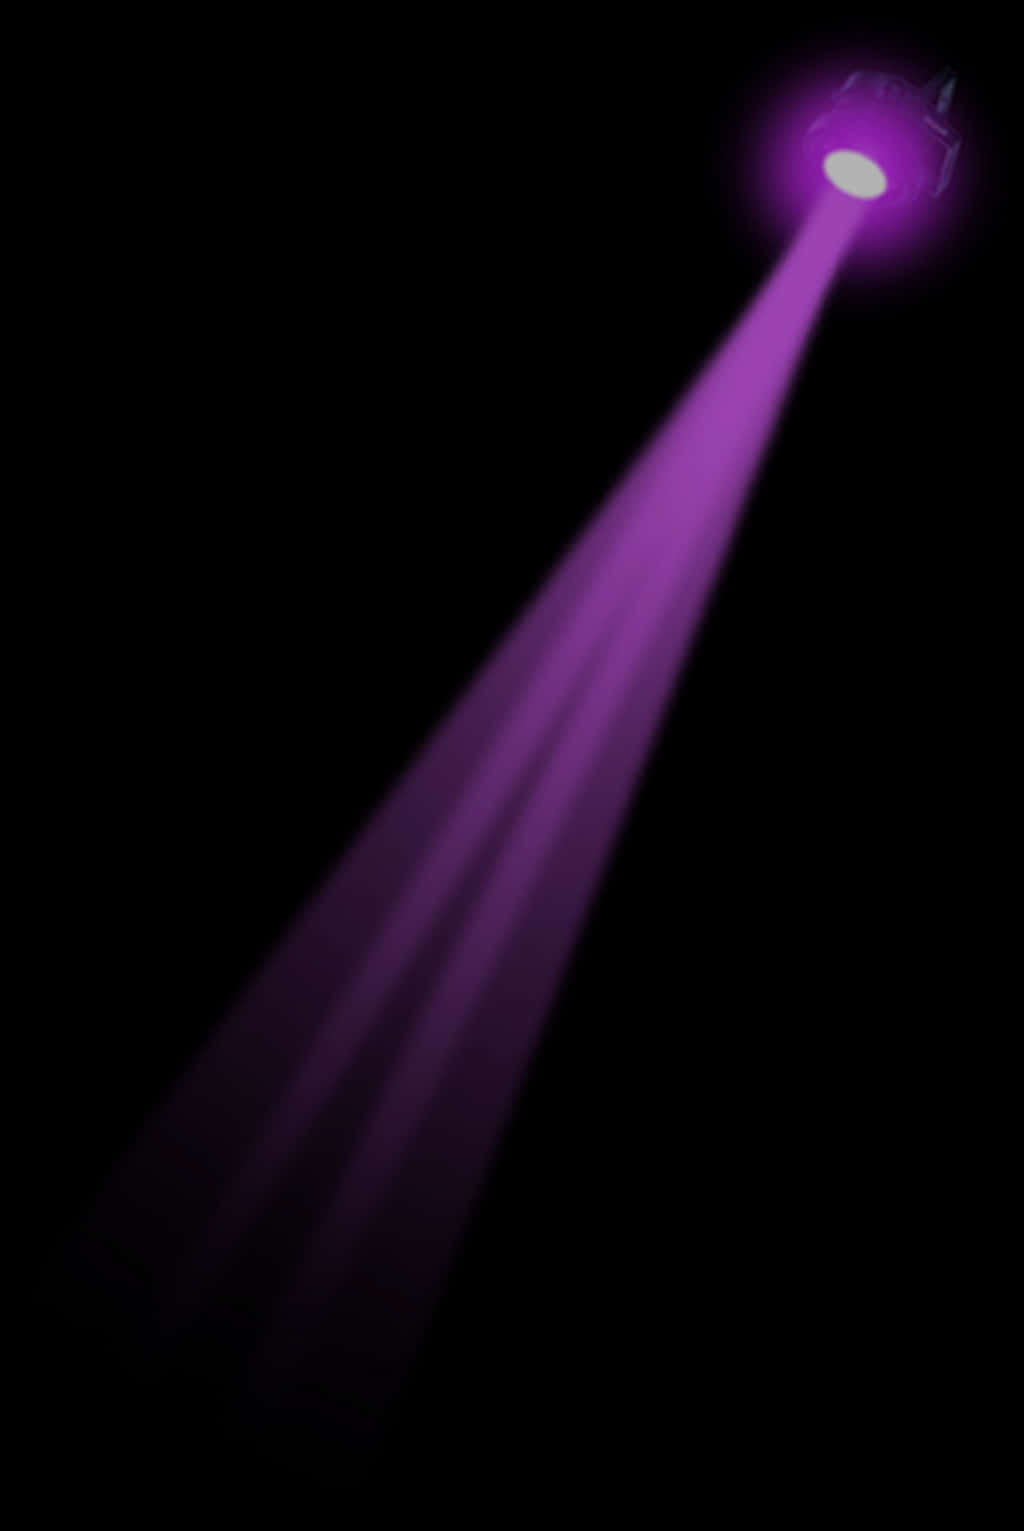 A Purple Light Beam In The Dark